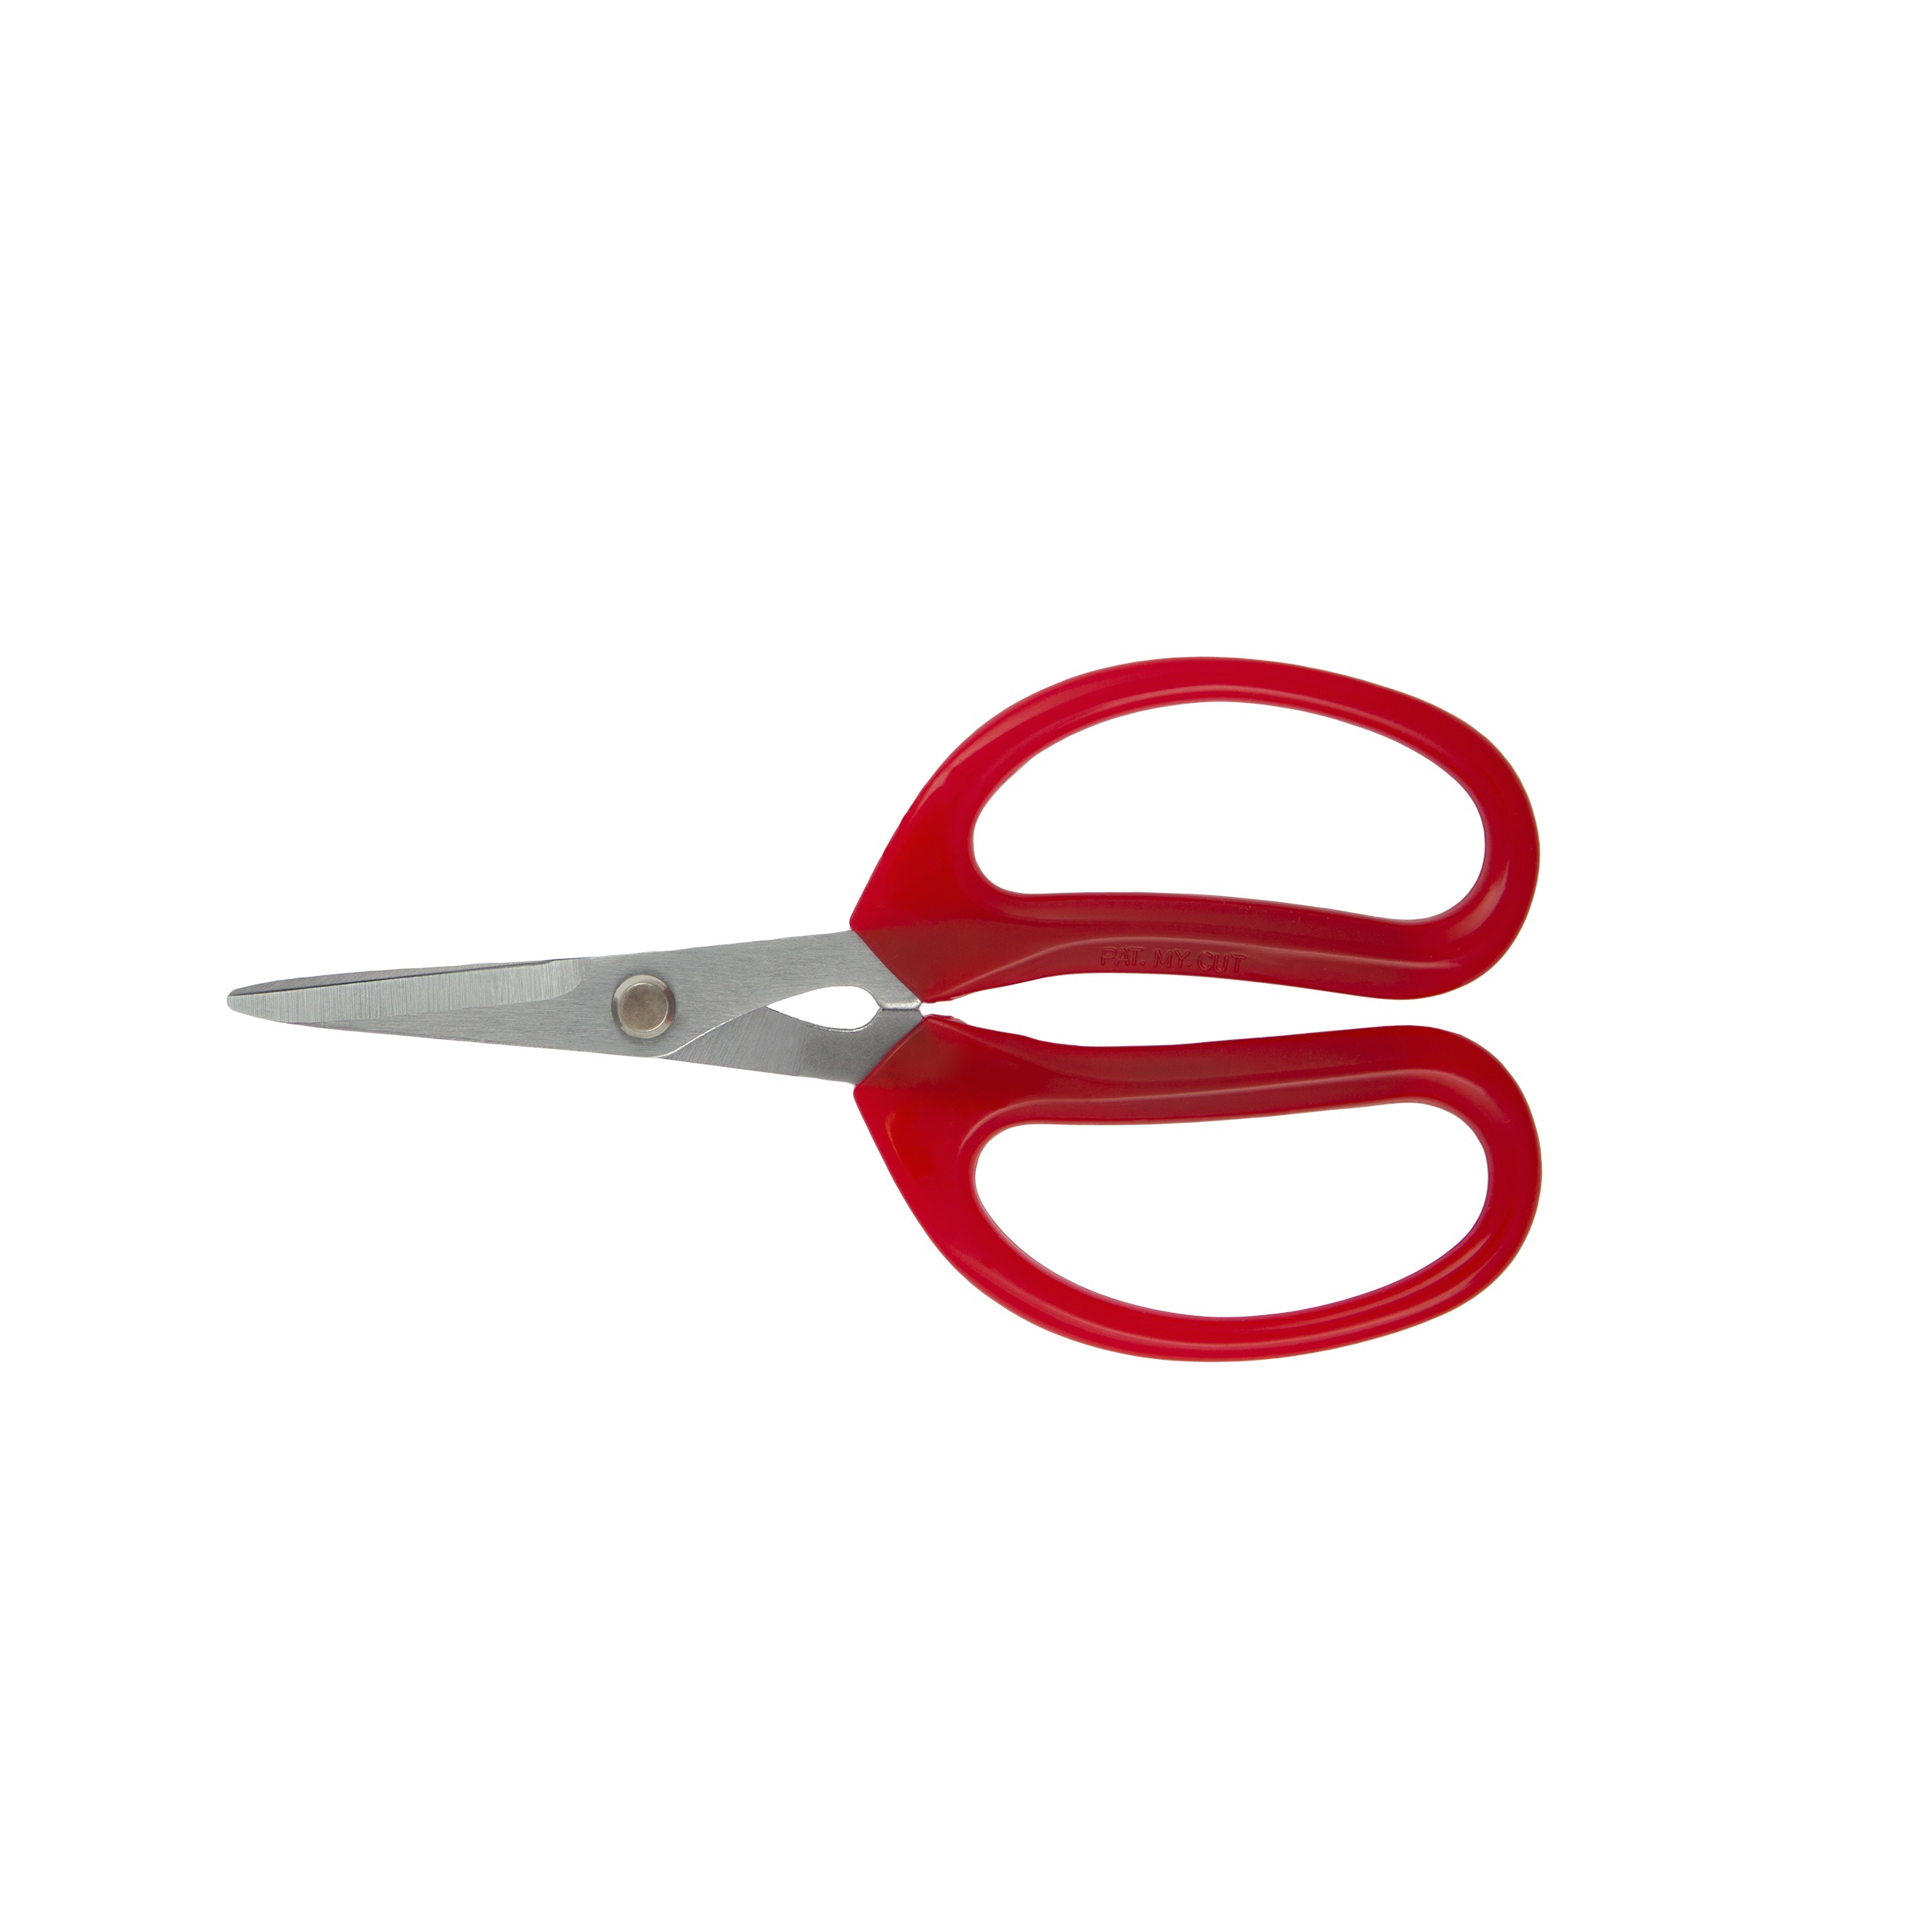 Darlac Softies Scissors DP120